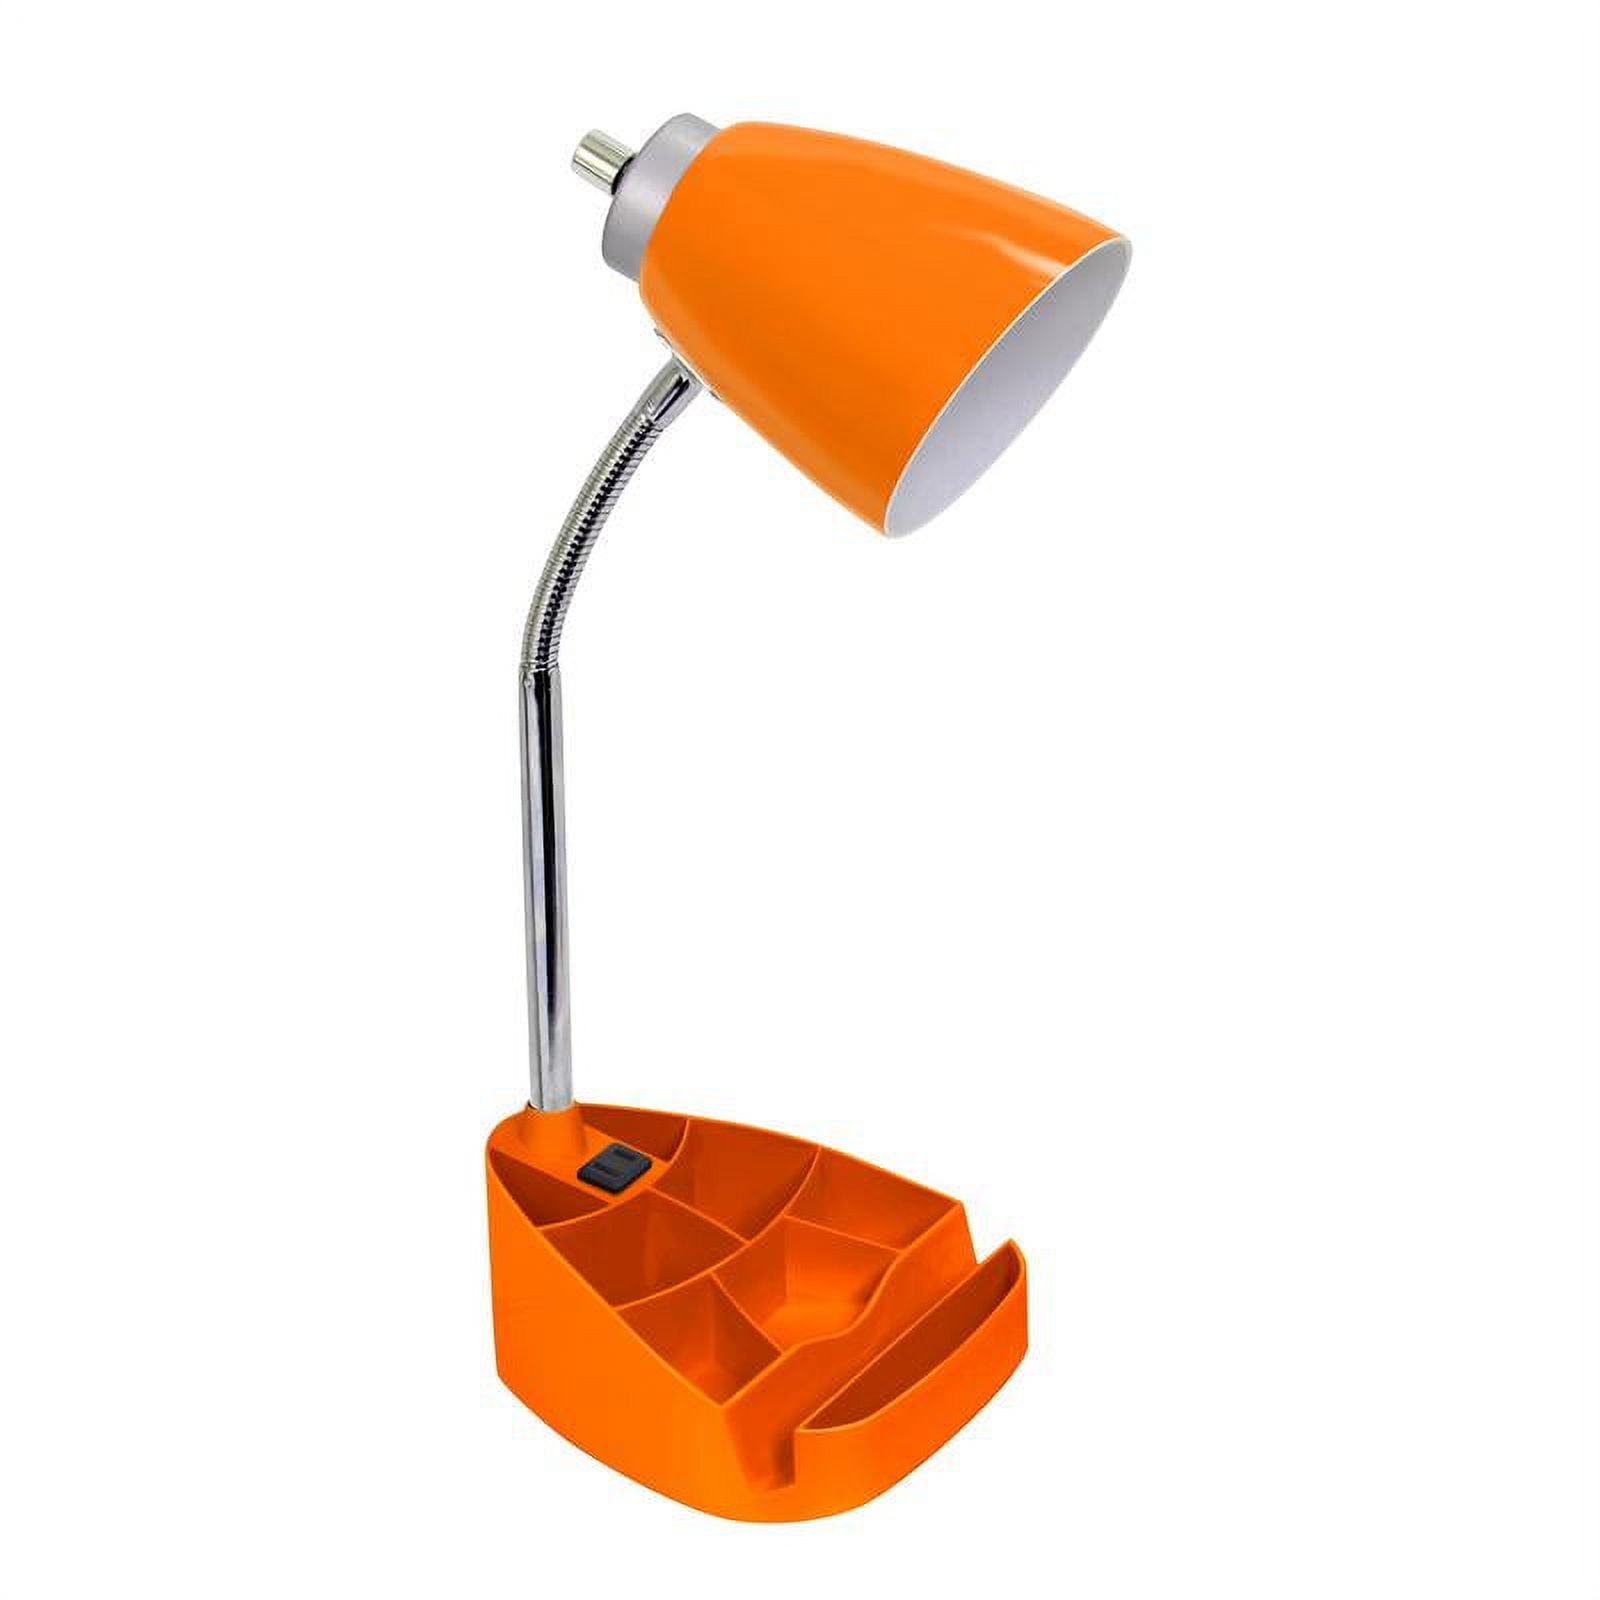 Ld1057-org Gooseneck Organizer Desk Lamp With Ipad Tablet Stand Book Holder & Charging Outlet, Orange